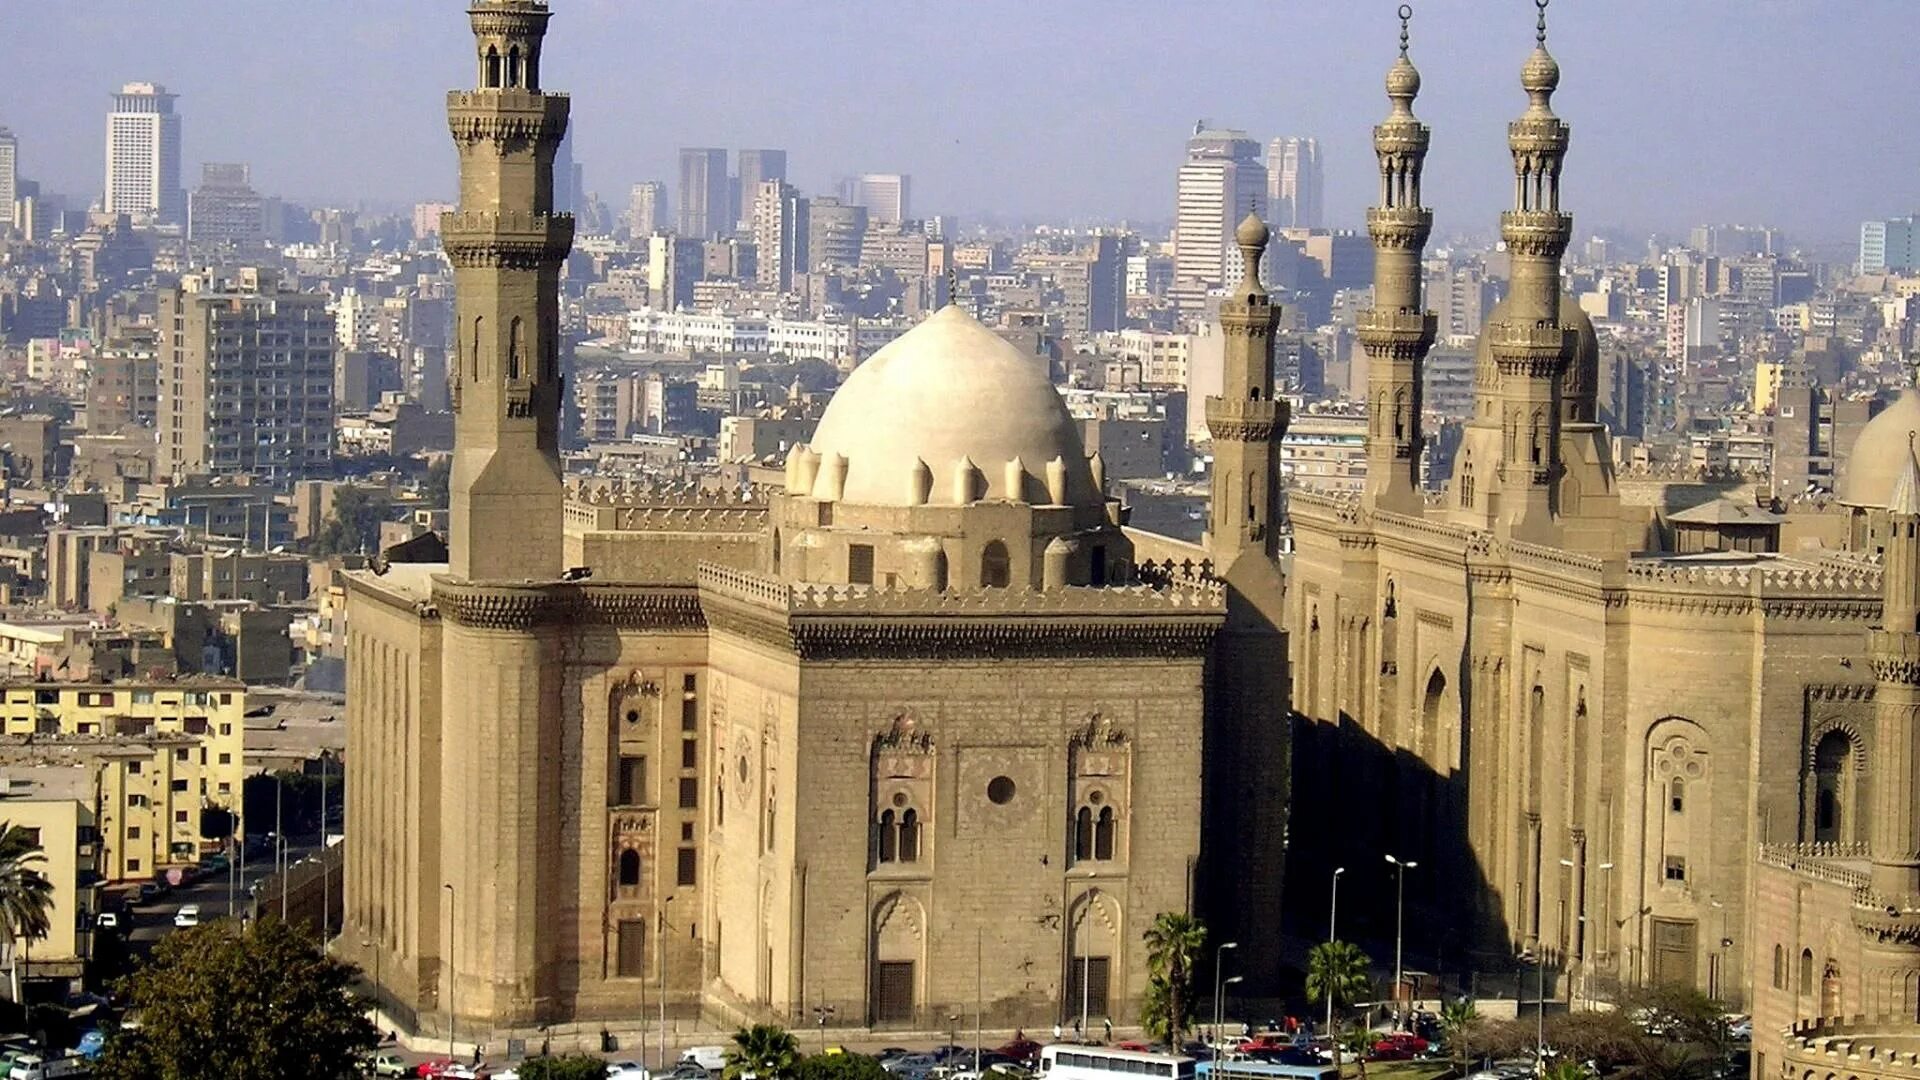 Мечеть Султана Хасана. Каин. Айванная мечеть Султана Хасана в Каире. Мечеть Султана Хасана Каир 1356-1363 гг. Минарет Хасана Каир.